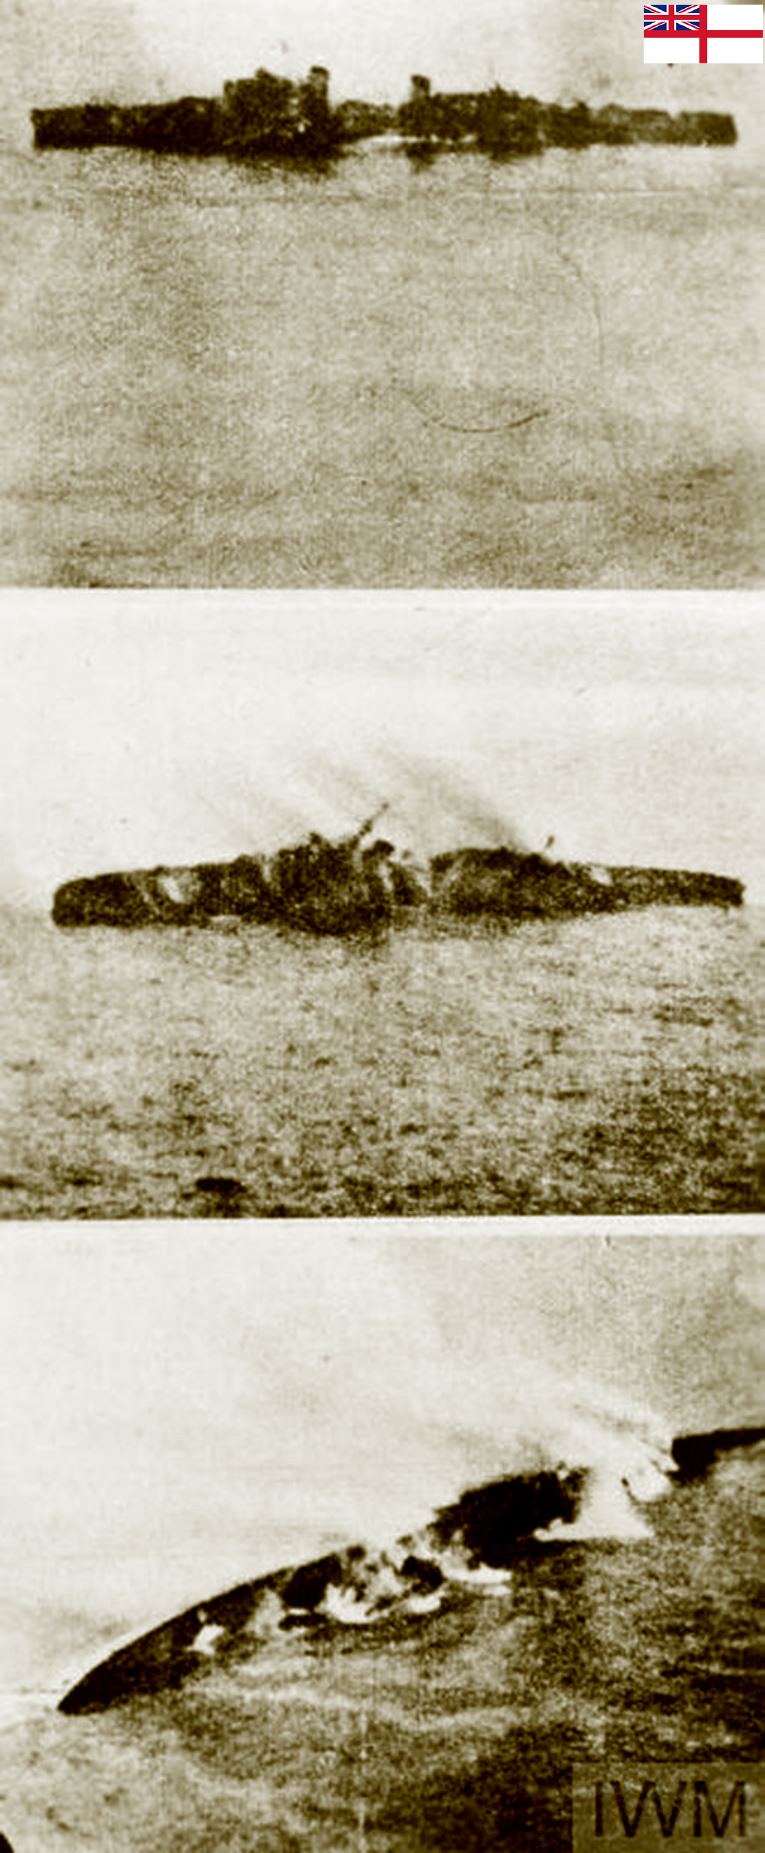 German airman recording the sinking of HMS Gloucester off the coast of Crete 22 May 1941 IWM HU1997Db